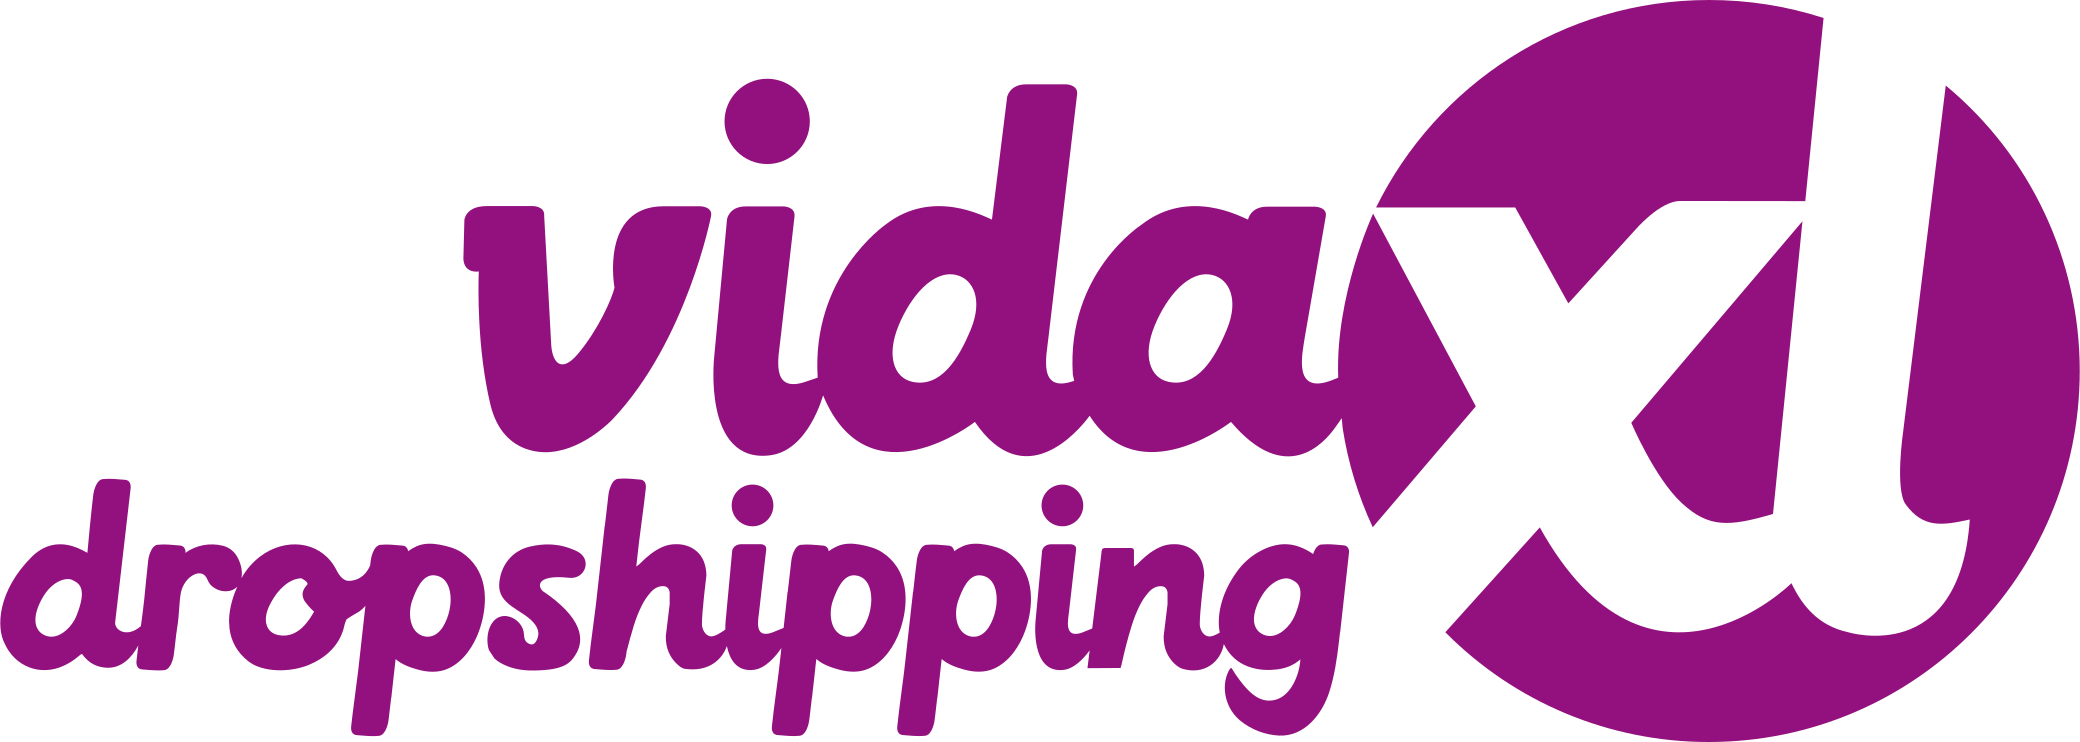 dropshippingxl Logo